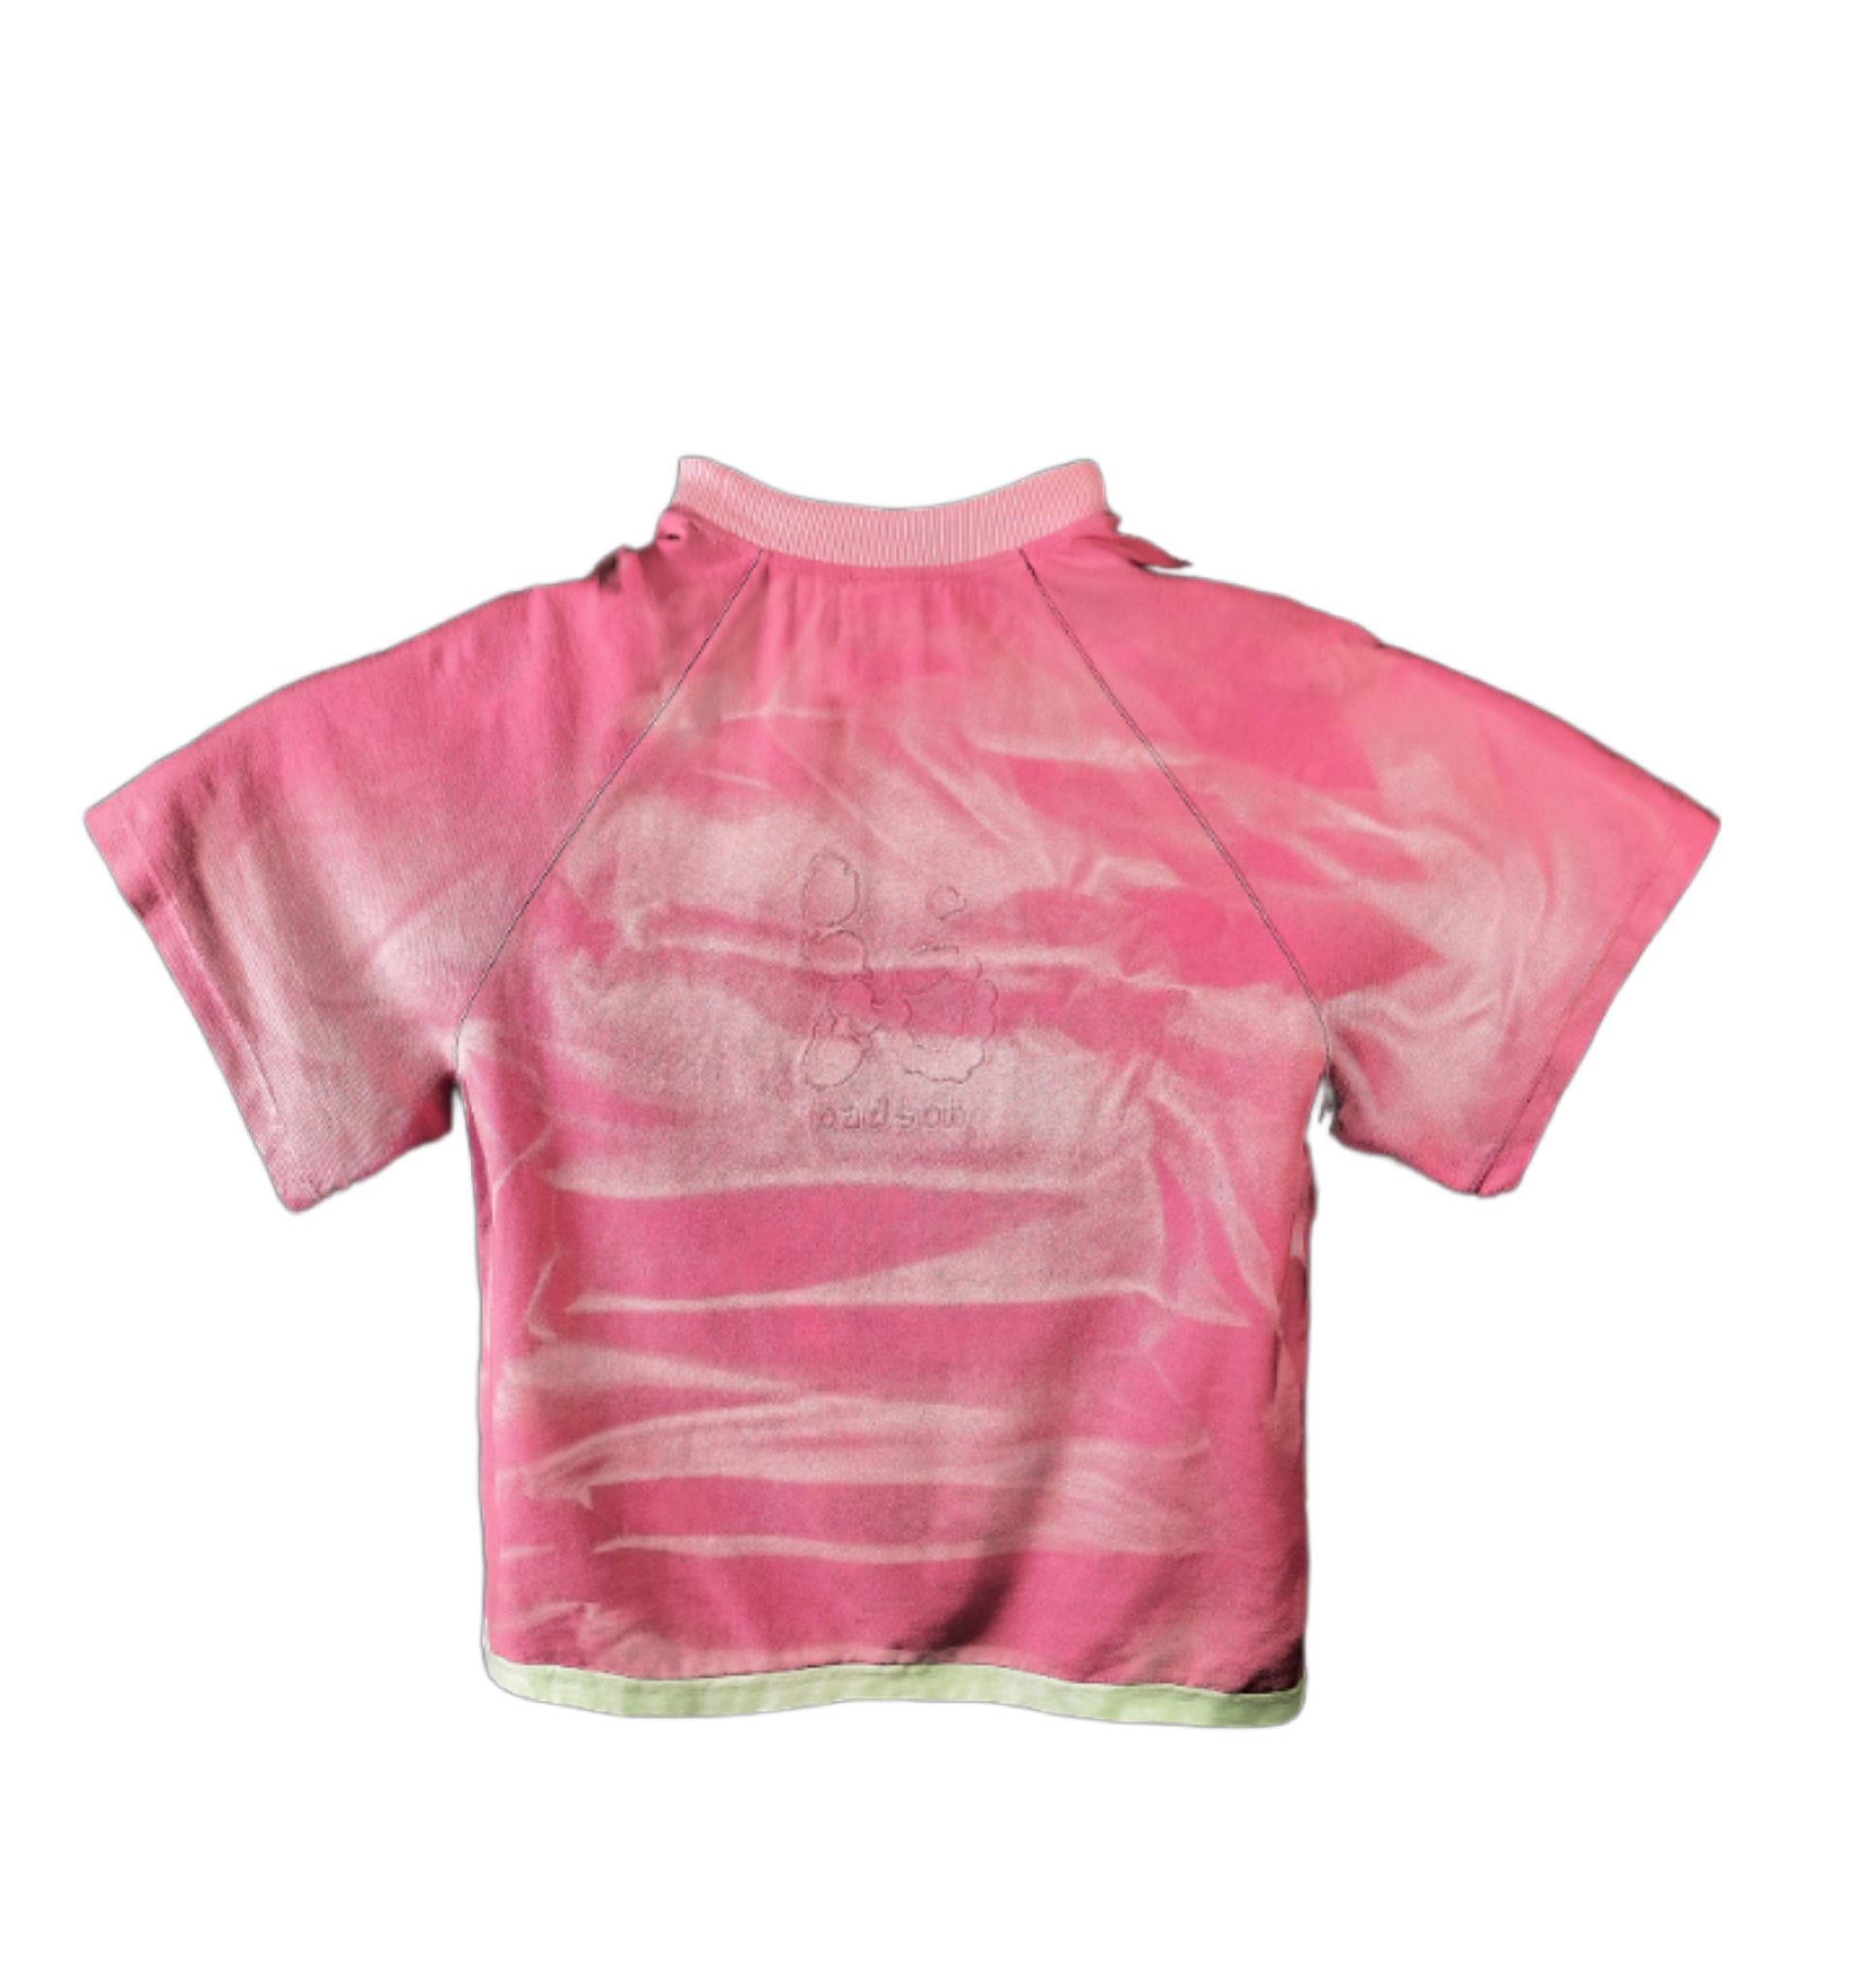 Bas Son Bubblegum Paint Tee Shirt